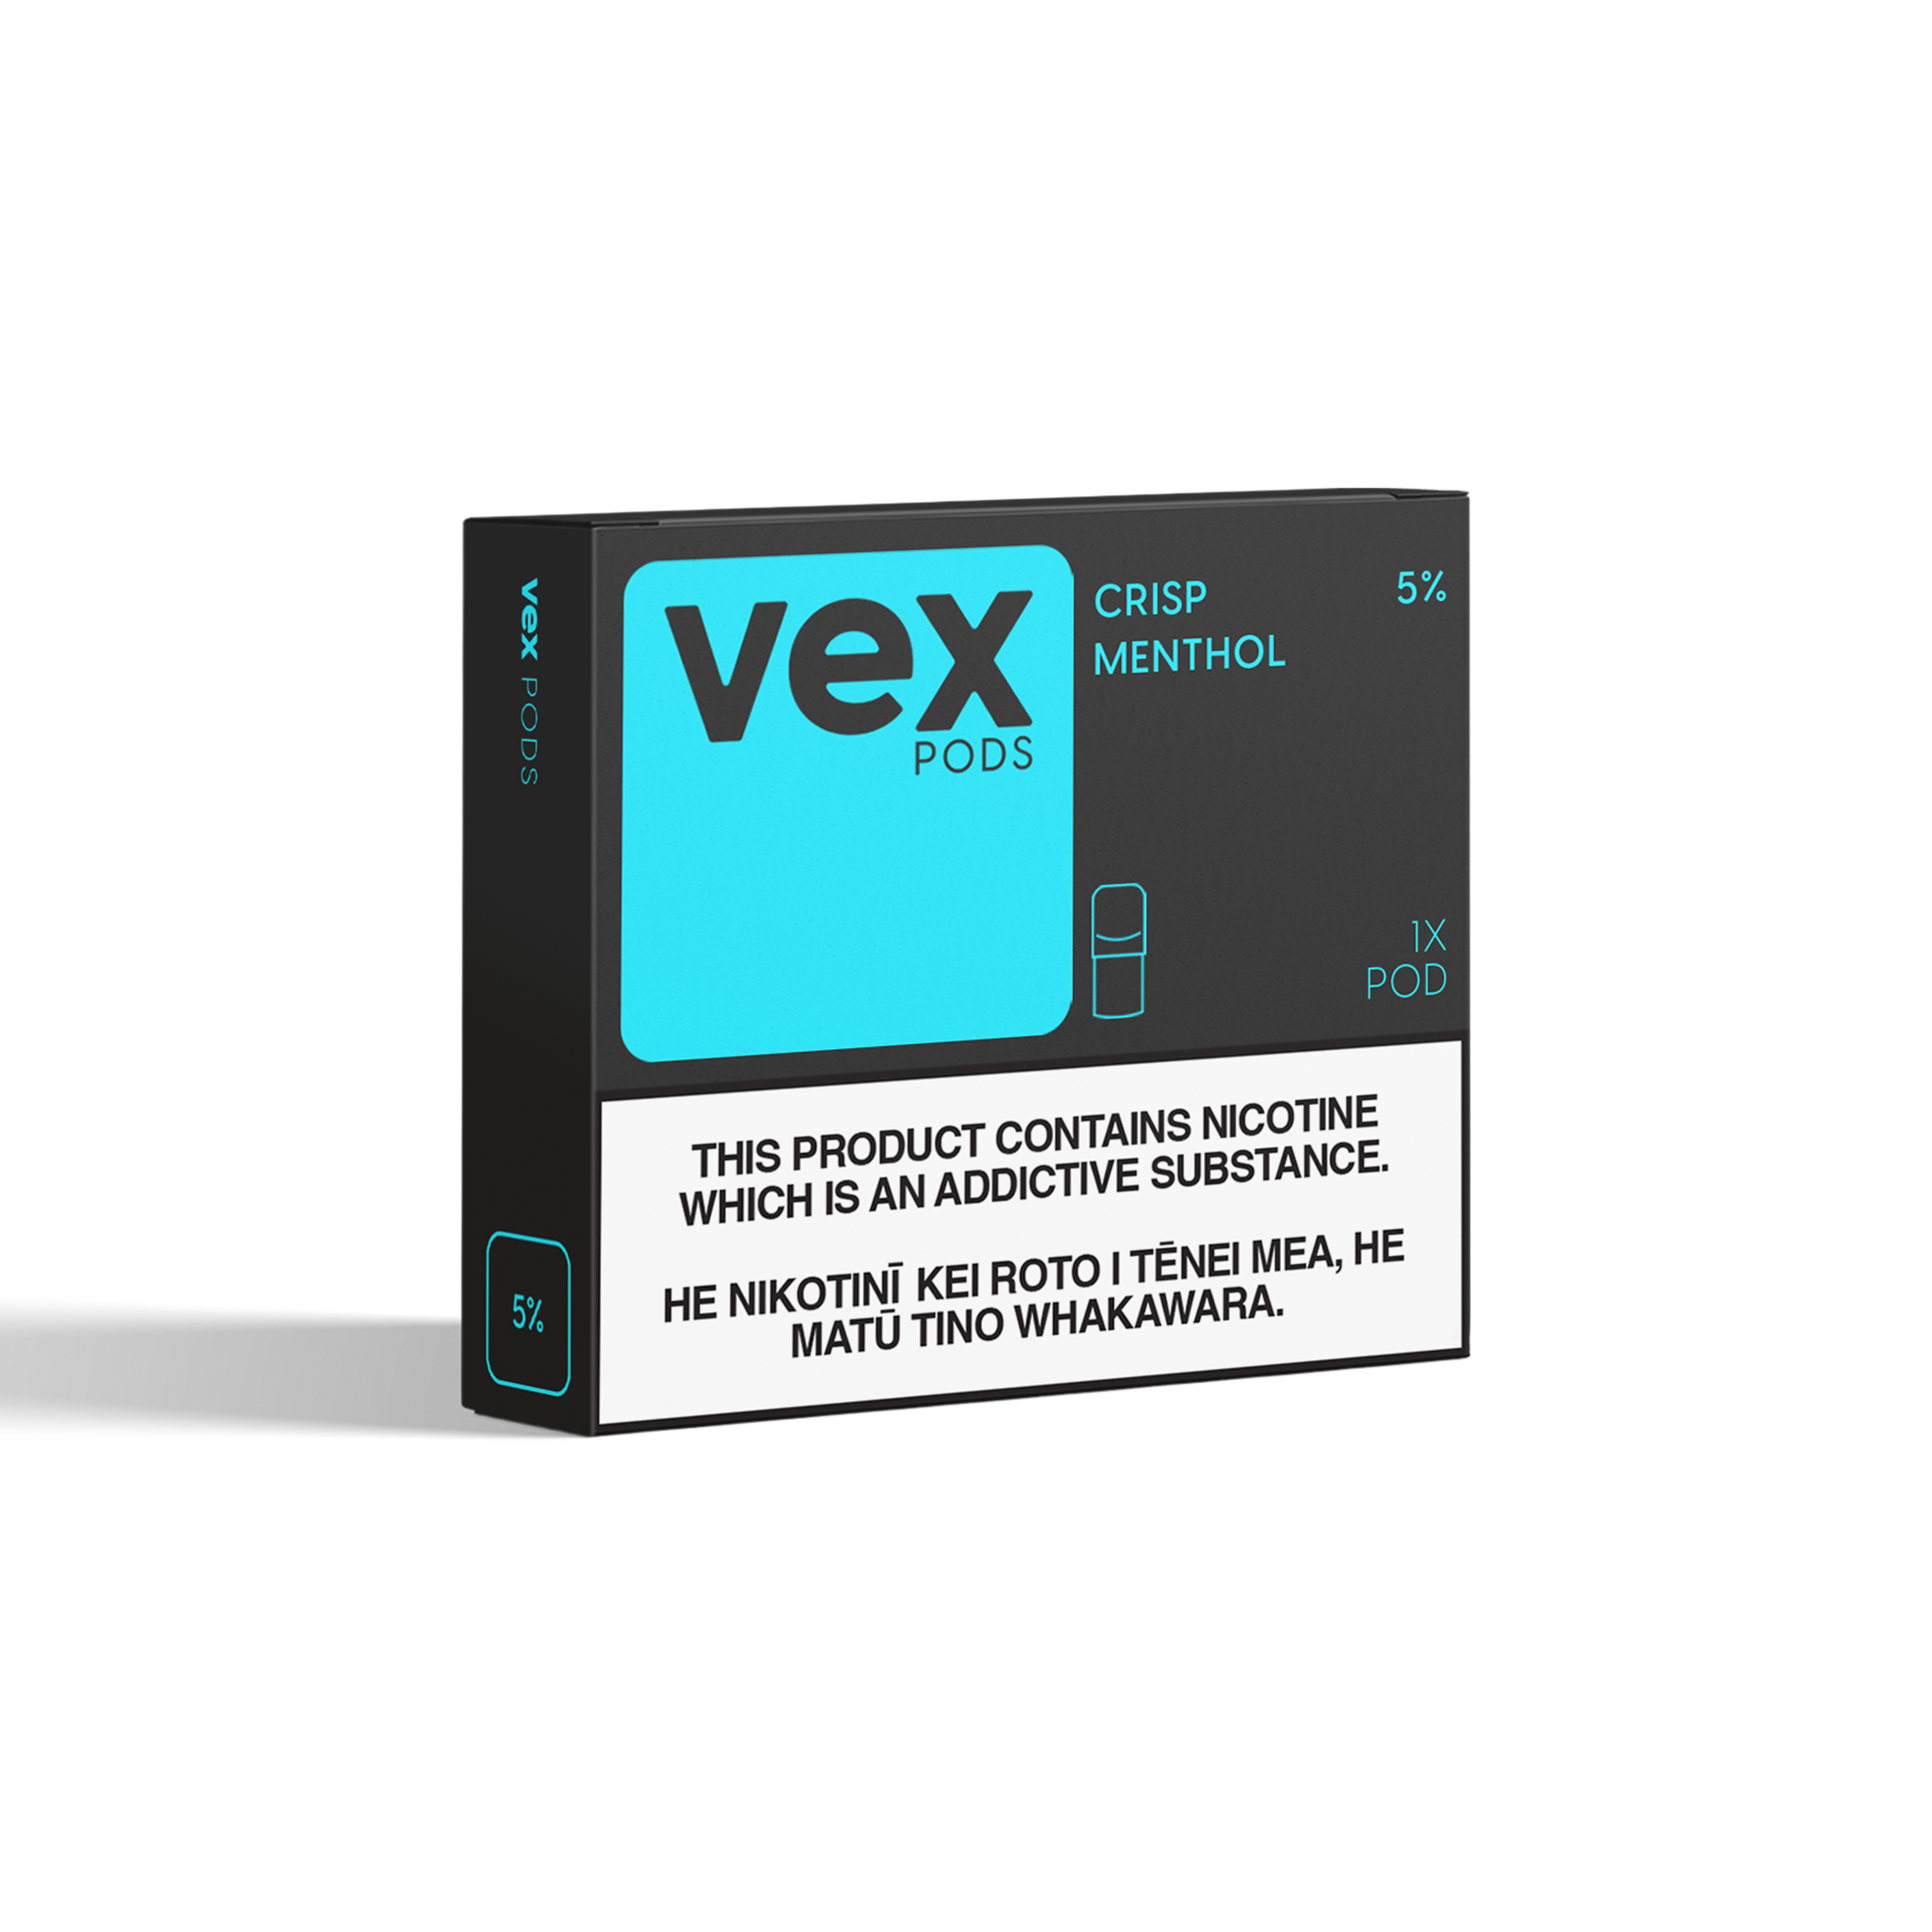 Crisp Menthol Replacement Single Pod by VEX